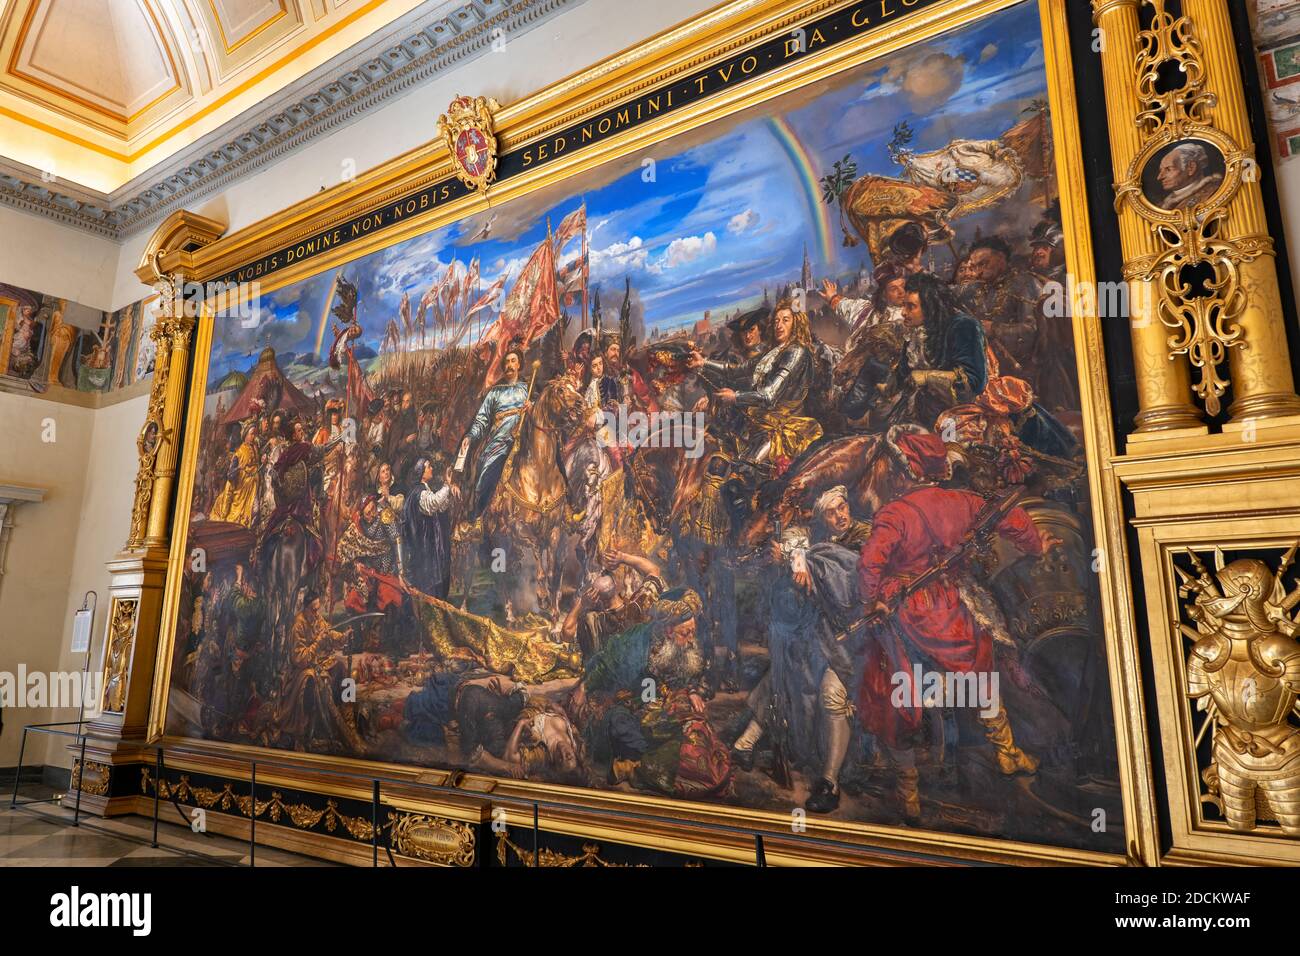 Painting of John III Sobieski King of Poland victory over the Ottoman Turks in Battle of Vienna (1683), oil canvas by Jan Matejko, Sobieski Room, Vati Stock Photo